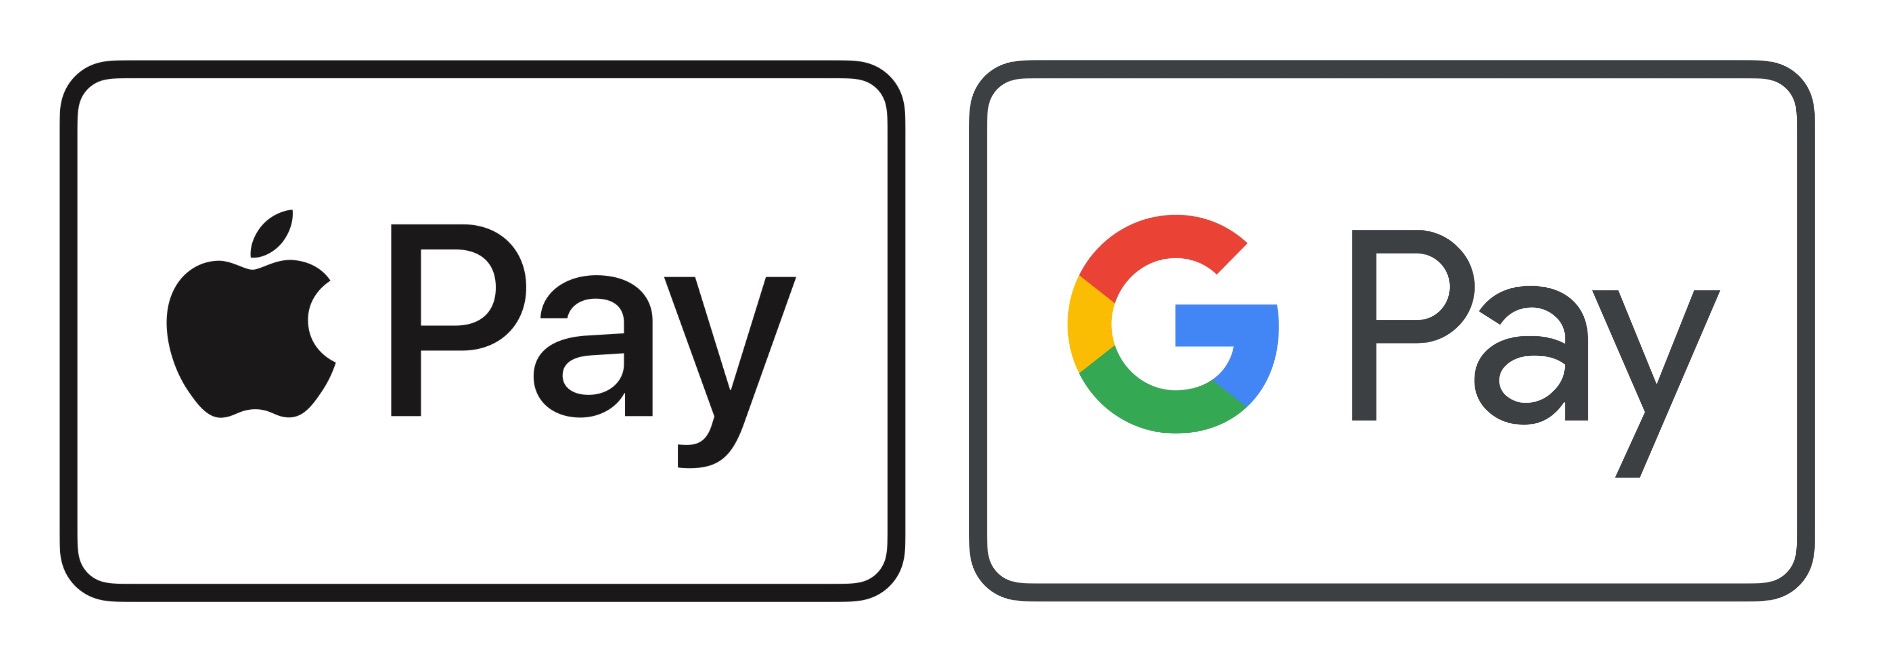 Google & Apple payments